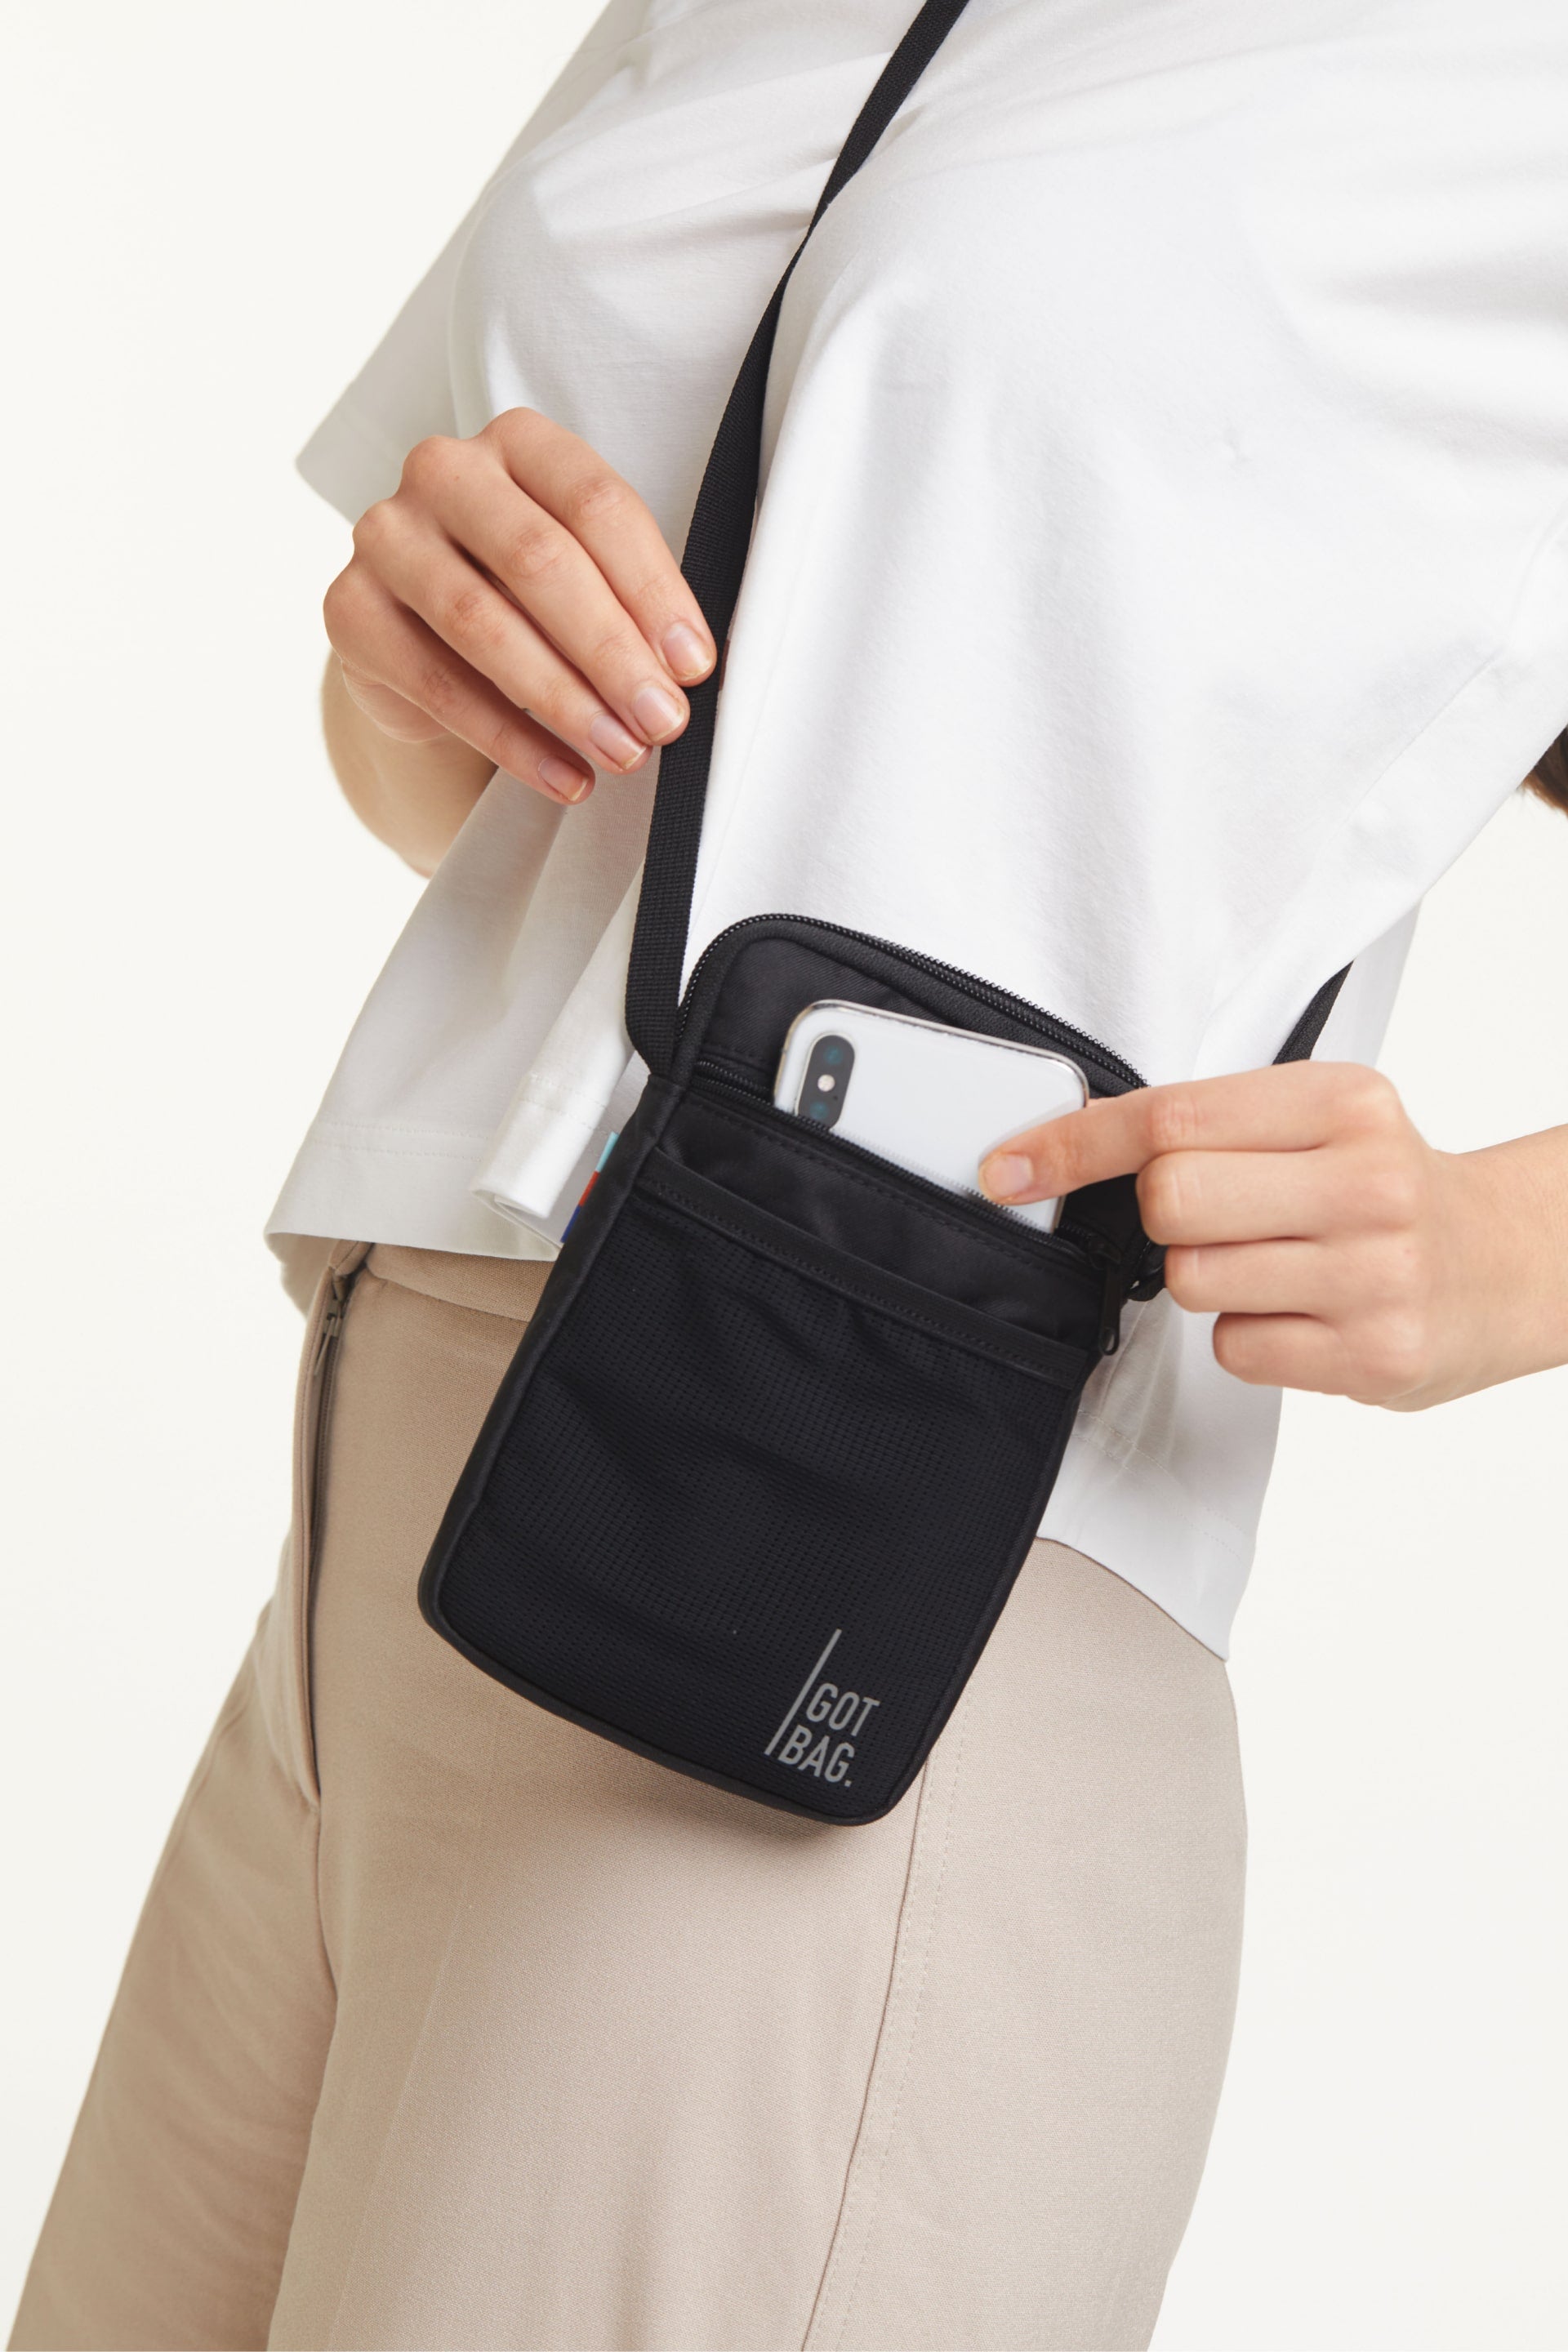 Card Holder Made of Ocean Plastic - Sustainable Wallet - GOT BAG